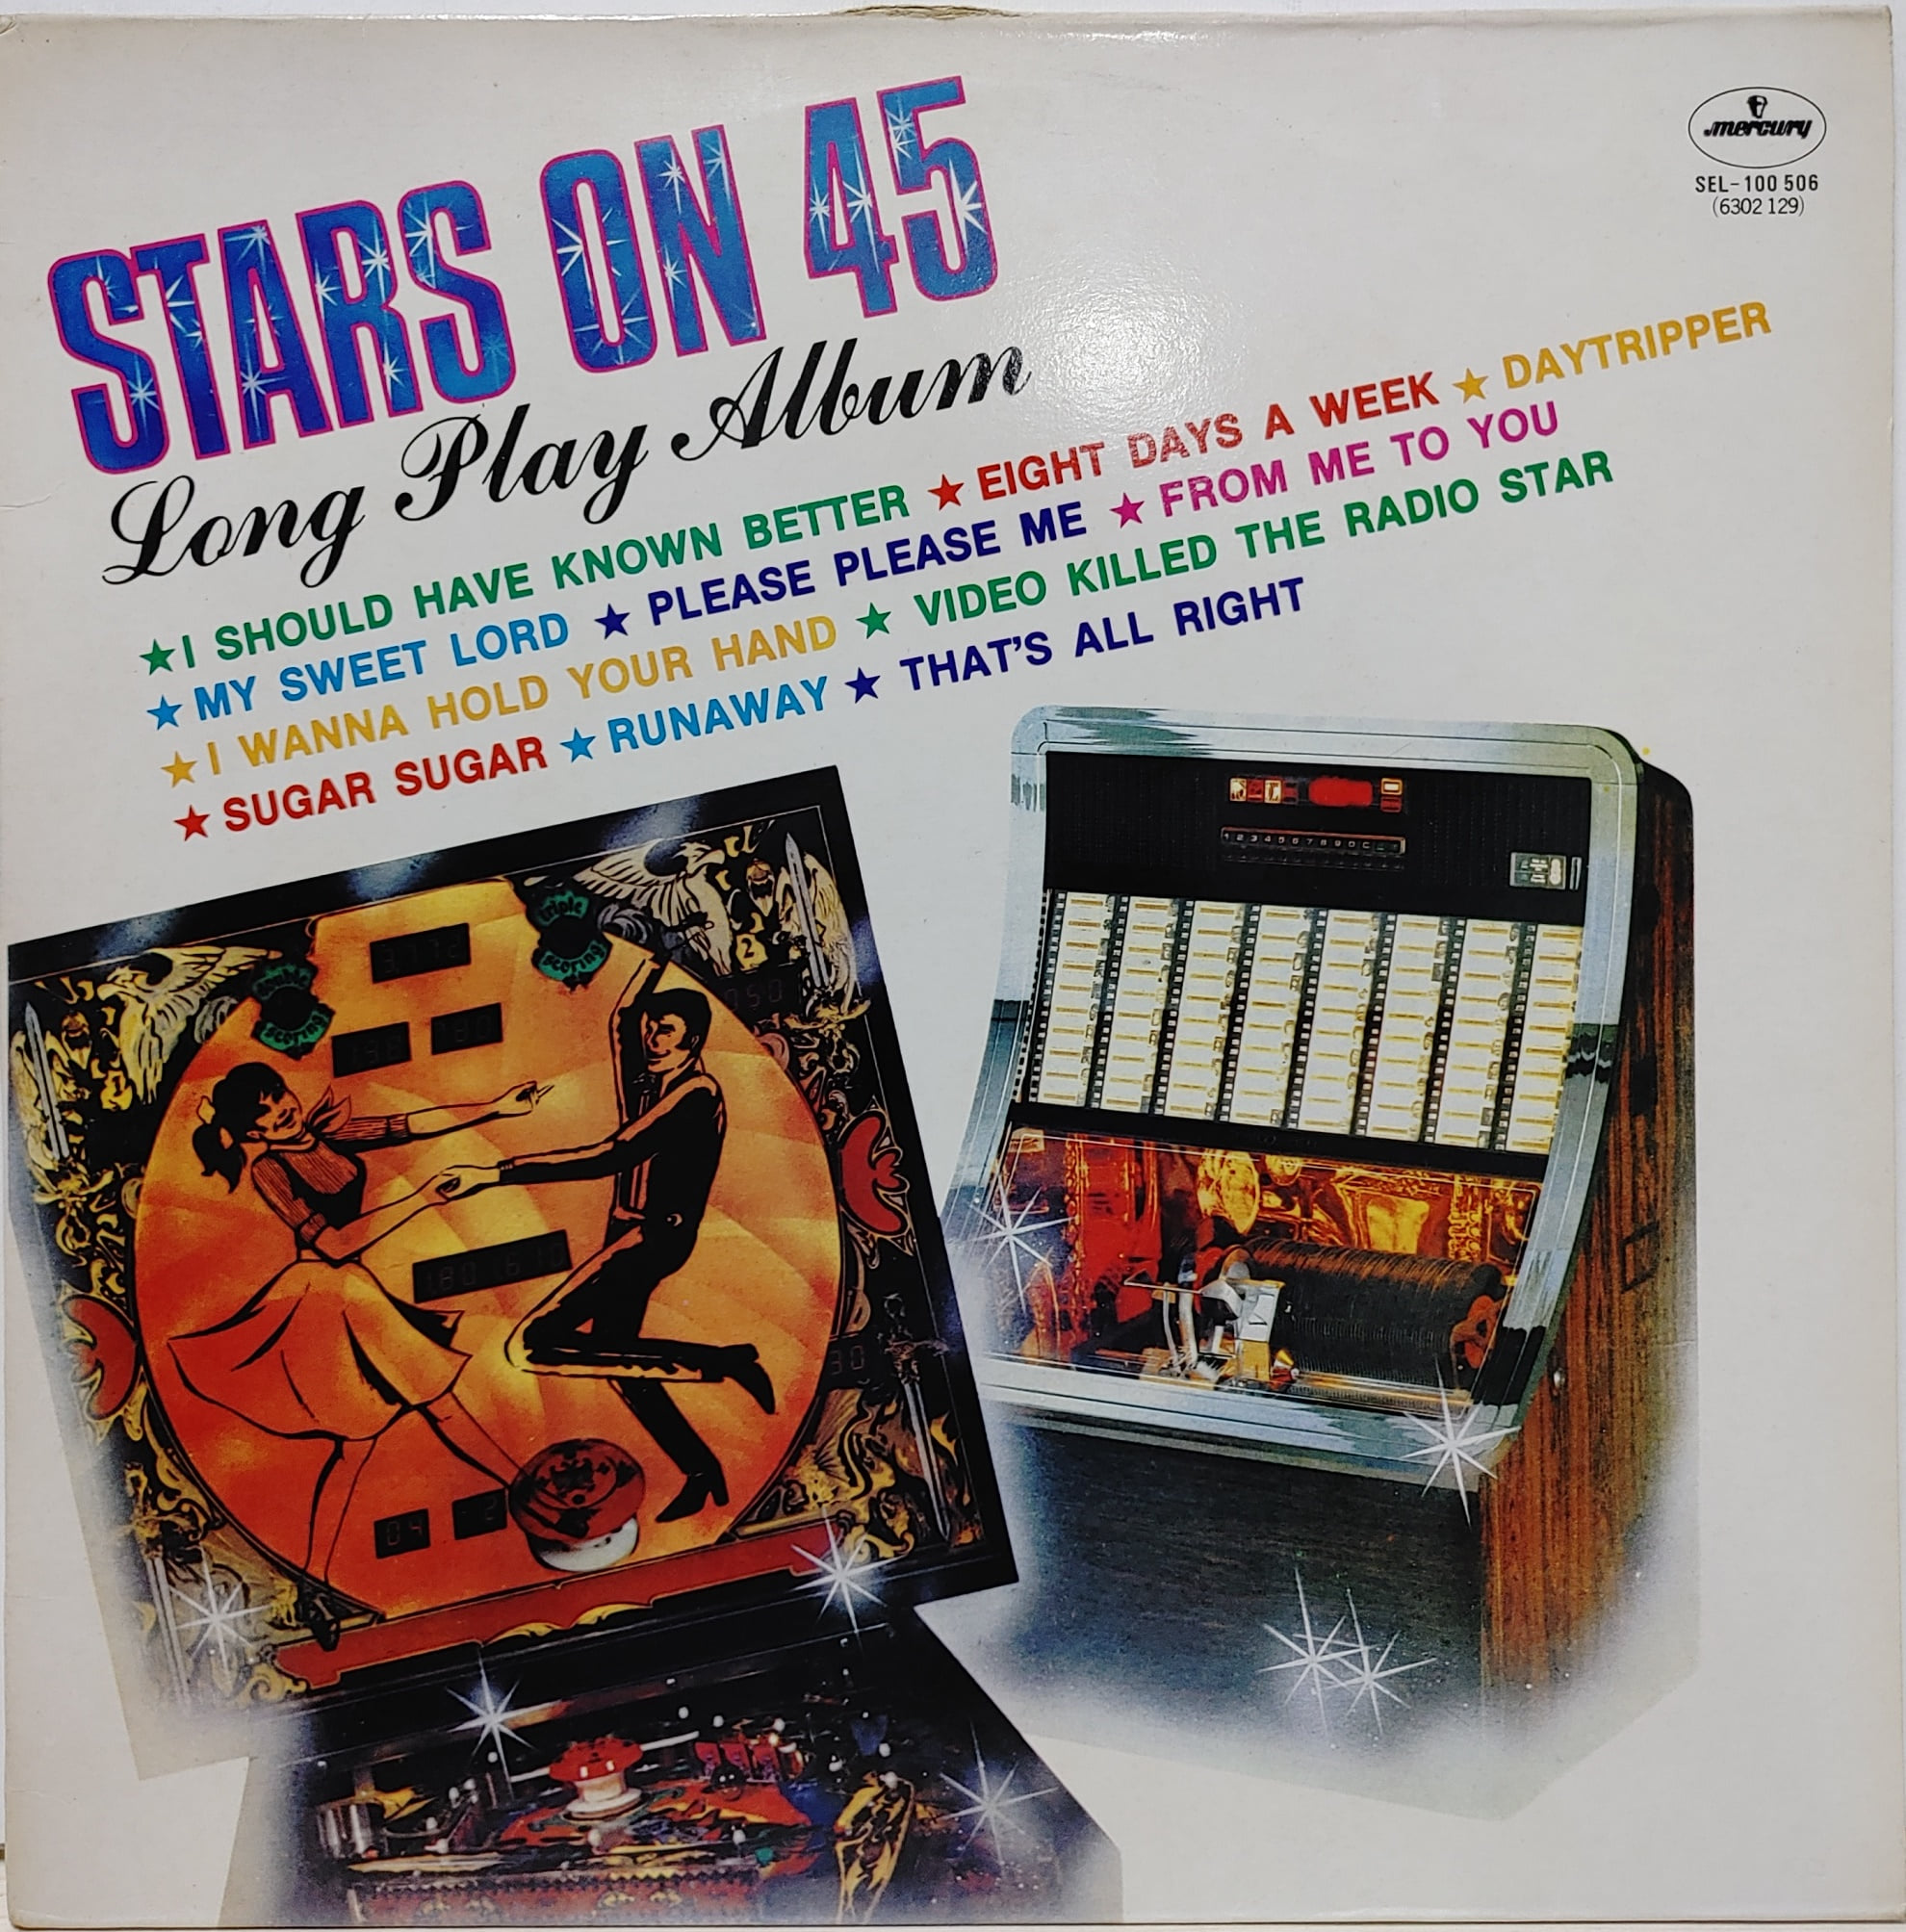 STARS ON 45 / Long Play Album